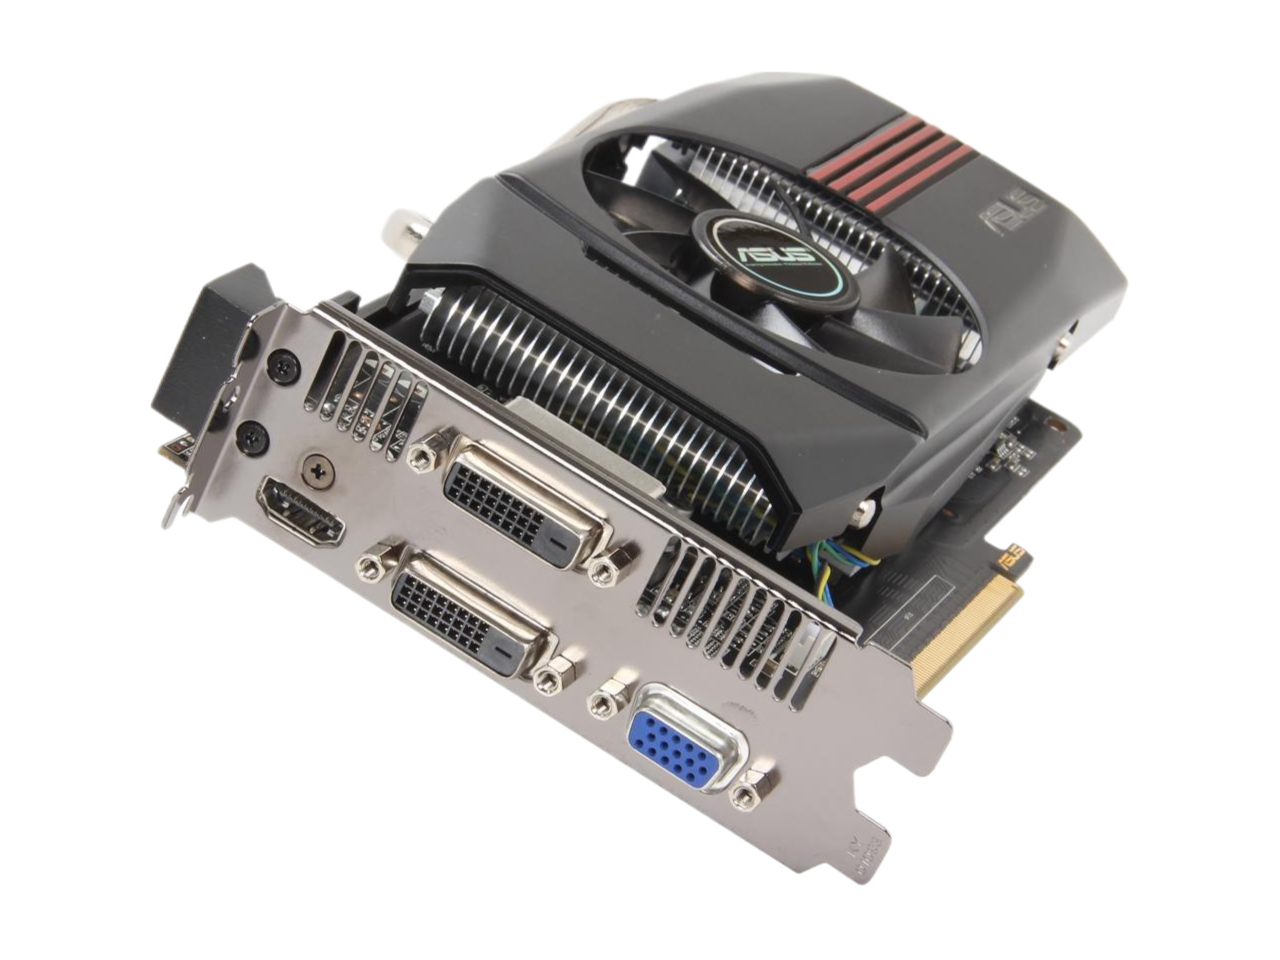 ASUS NVIDIA GeForce GTX 650 1GB GDDR5 PCI Express 3.0 Video Card GTX650-DCO-1GD5